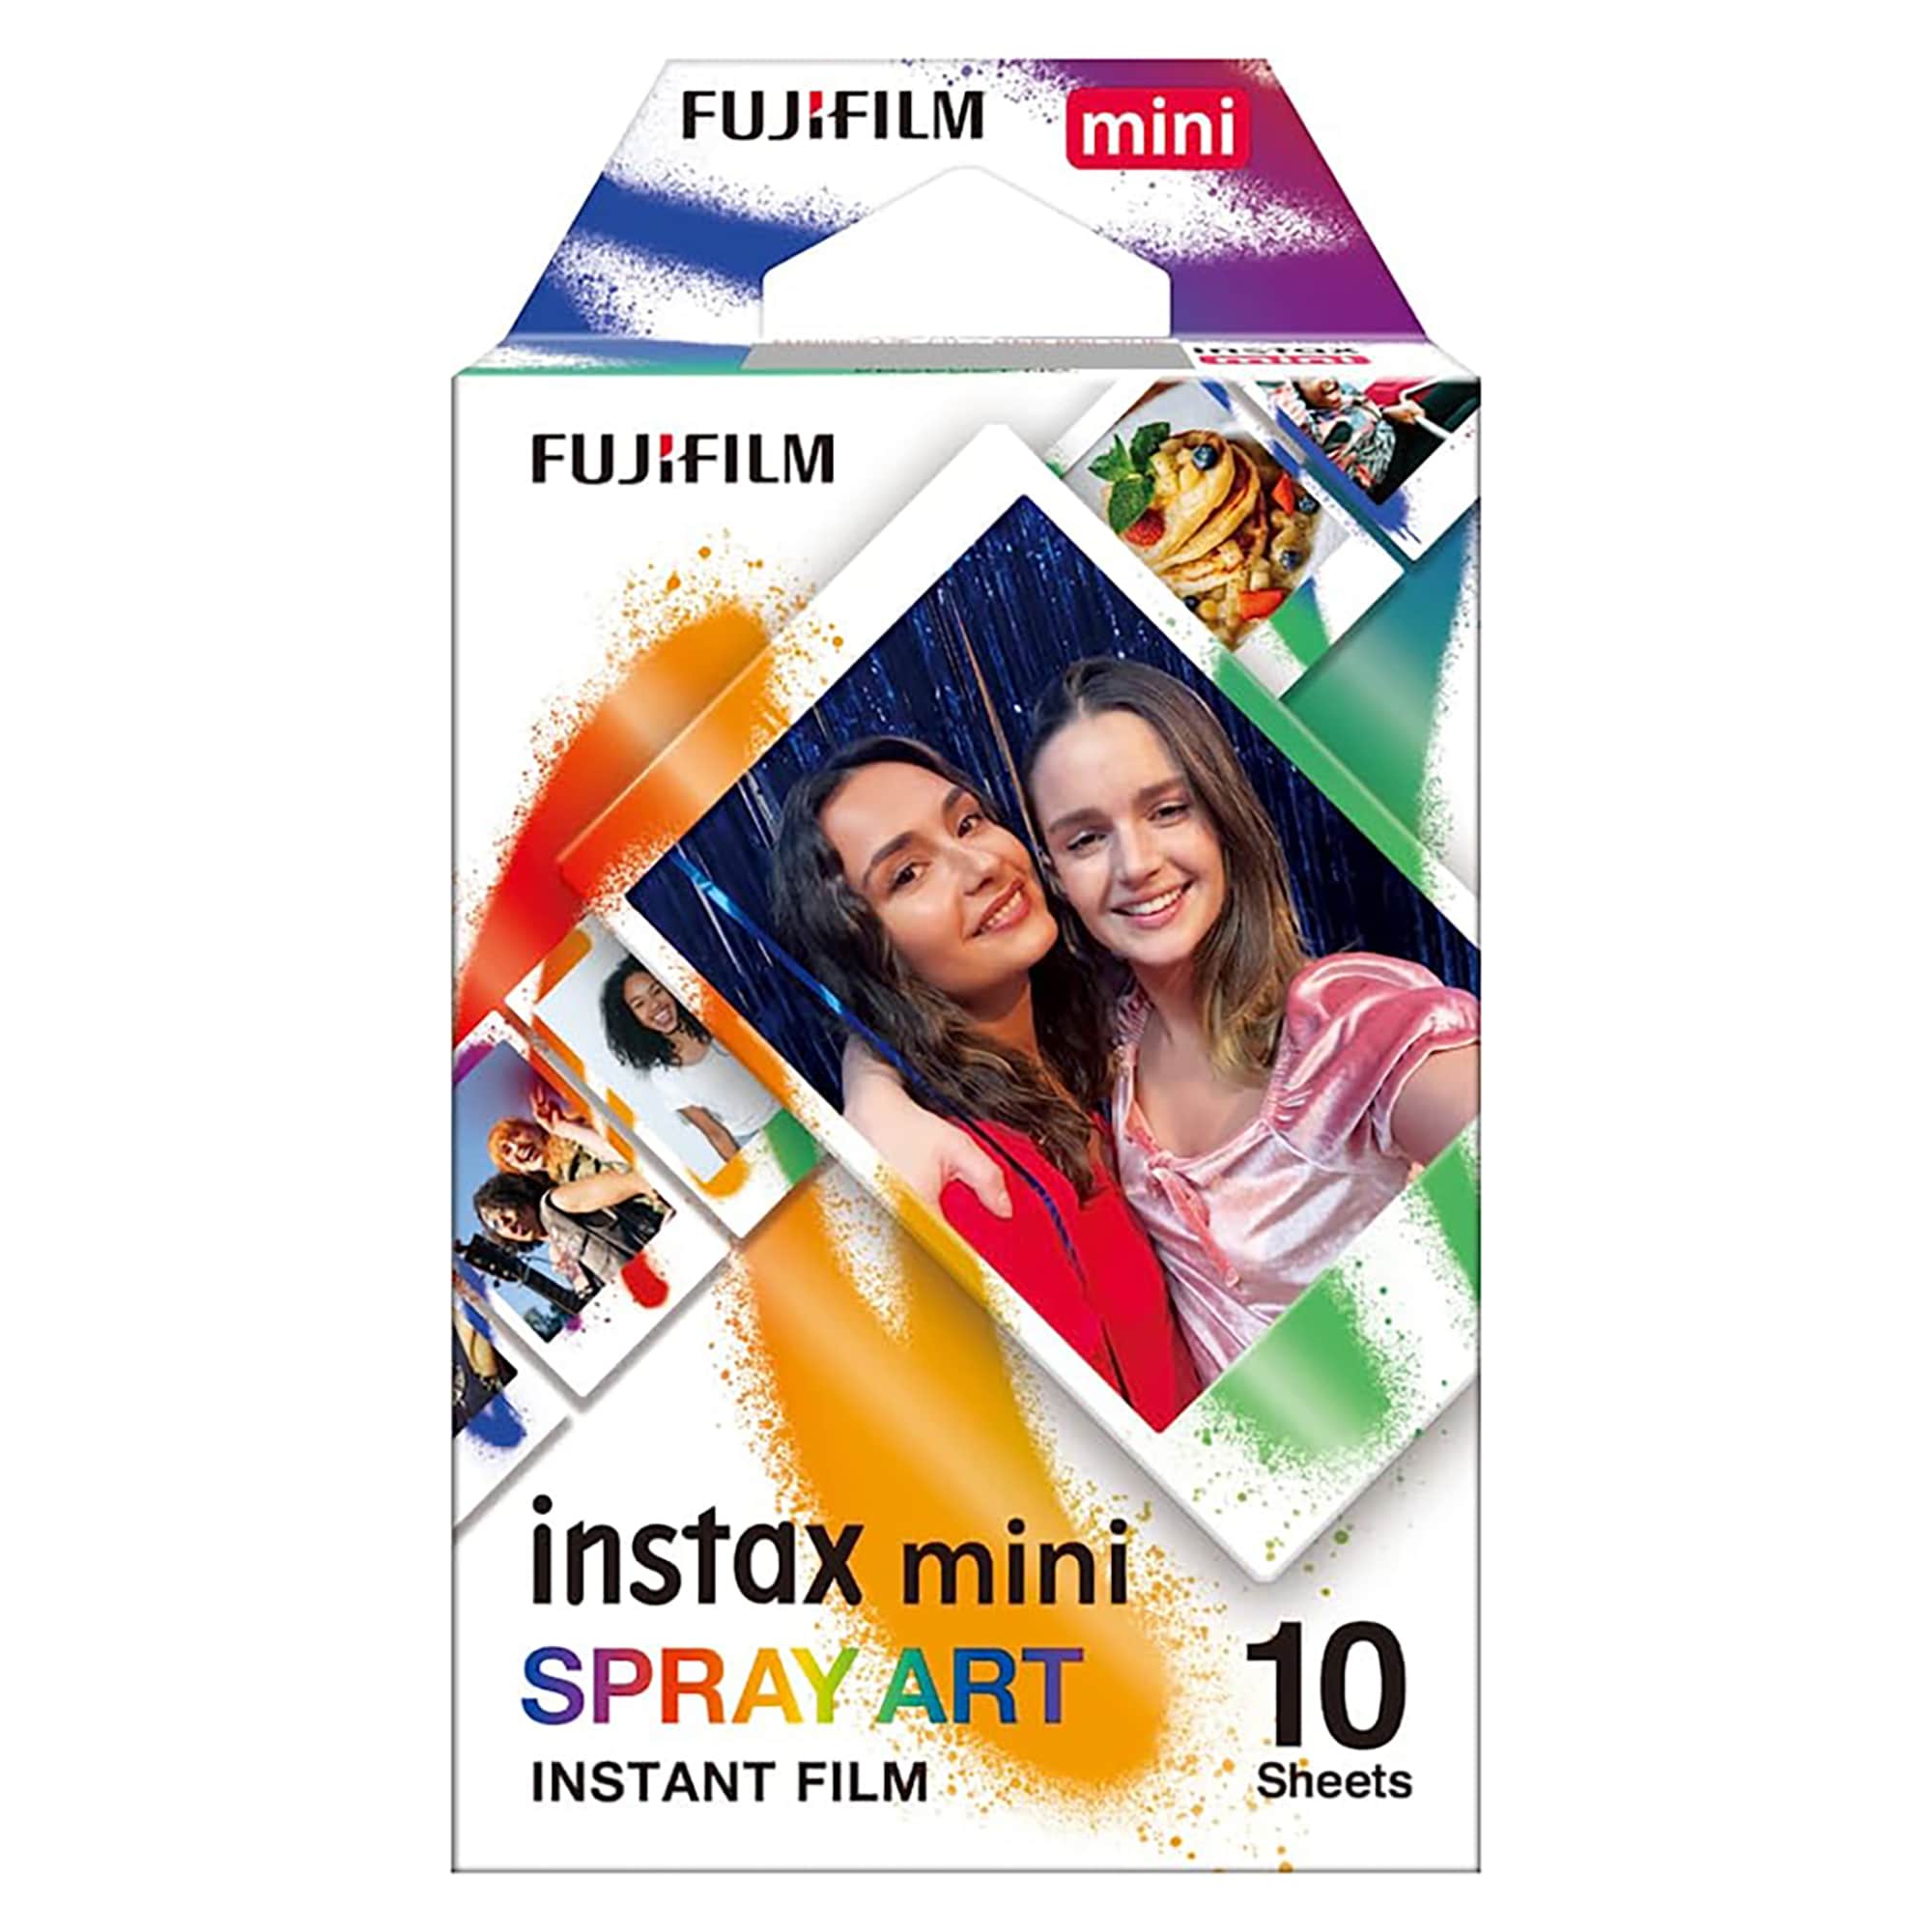 Fujifilm Instax Film Mini 10 bilder Spray Art